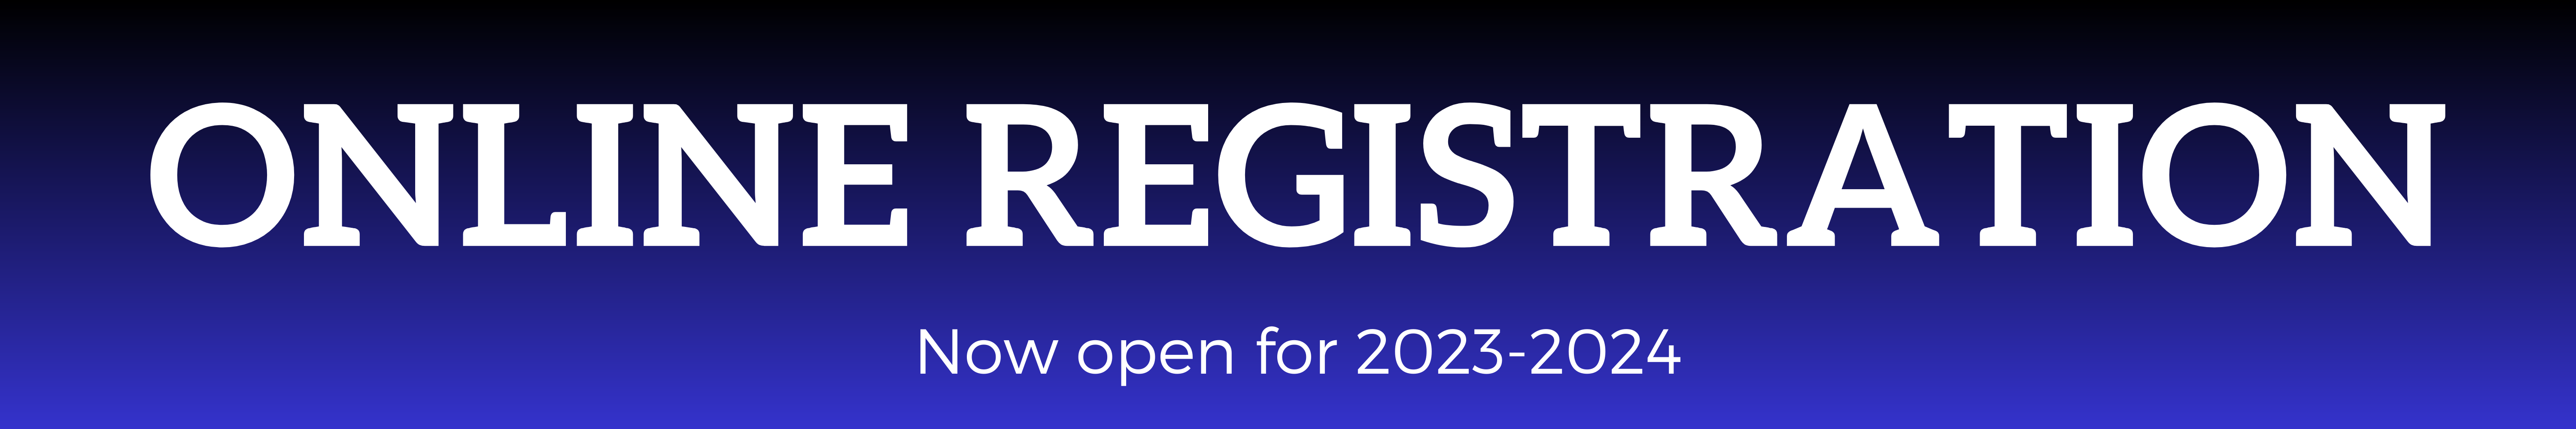 Open Registration Now Open for 2023-2024